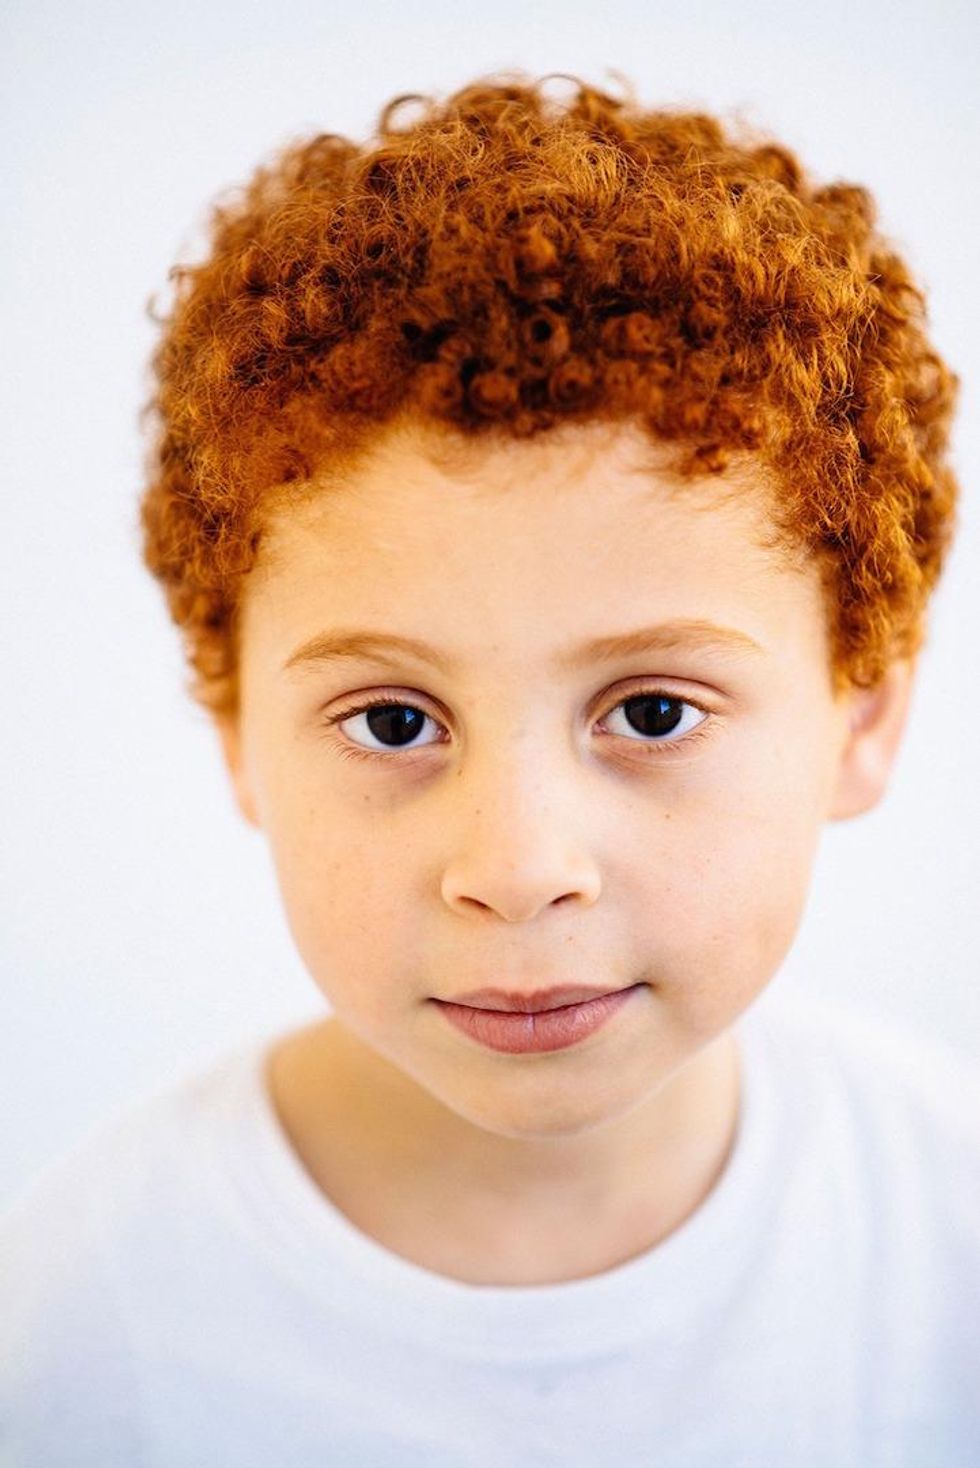 little boy, red hair, biracial, ethnicity, prejudice